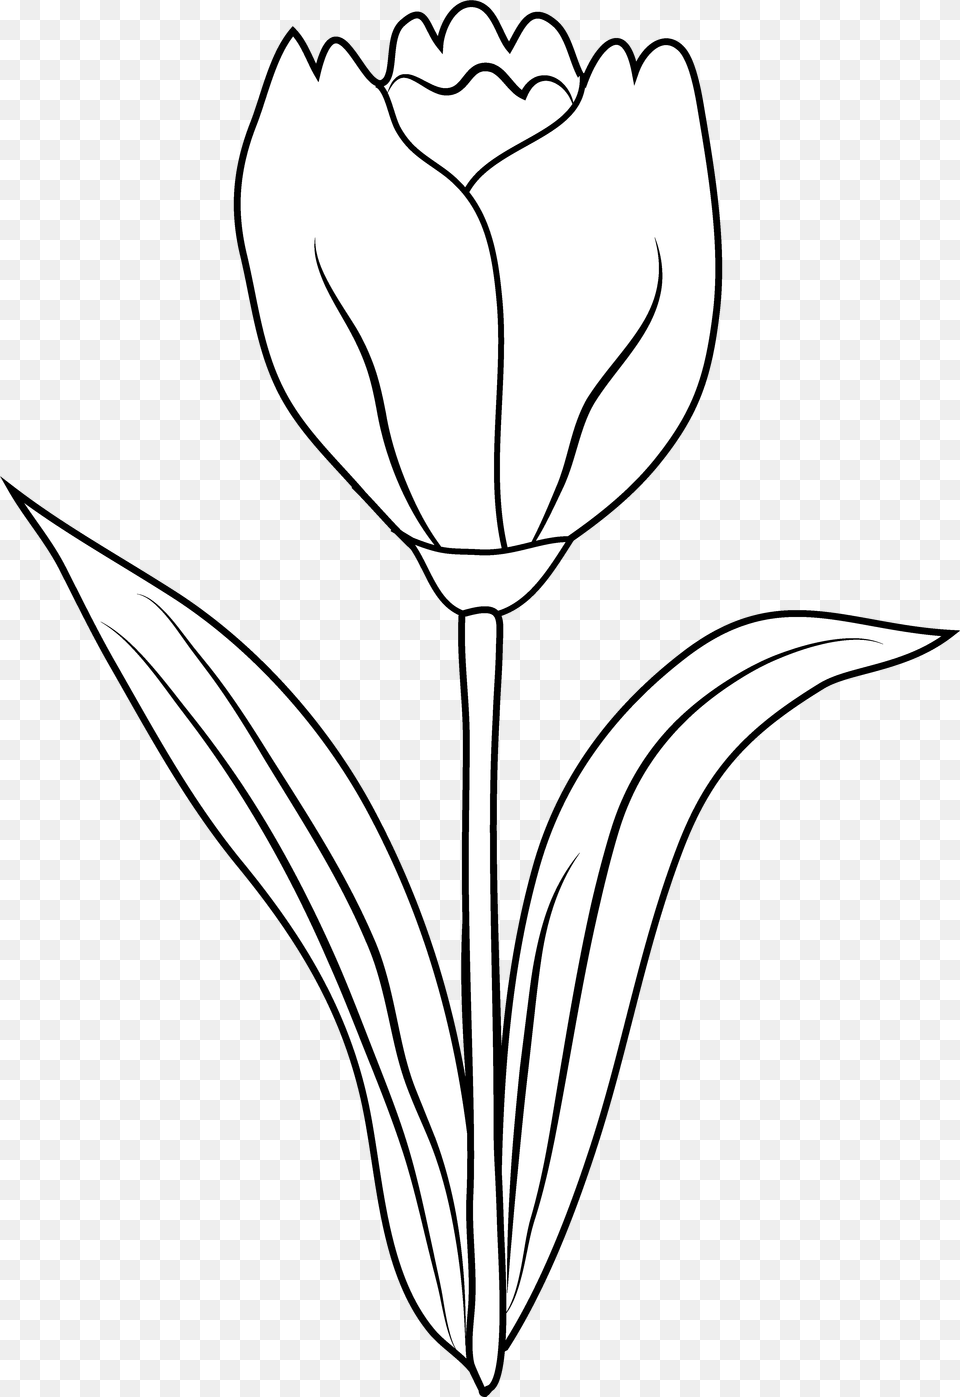 Tulips Vector Library Tulip Clip Art Panda Clipart Tulip Flower Outline, Plant, Petal, Blade, Dagger Free Transparent Png